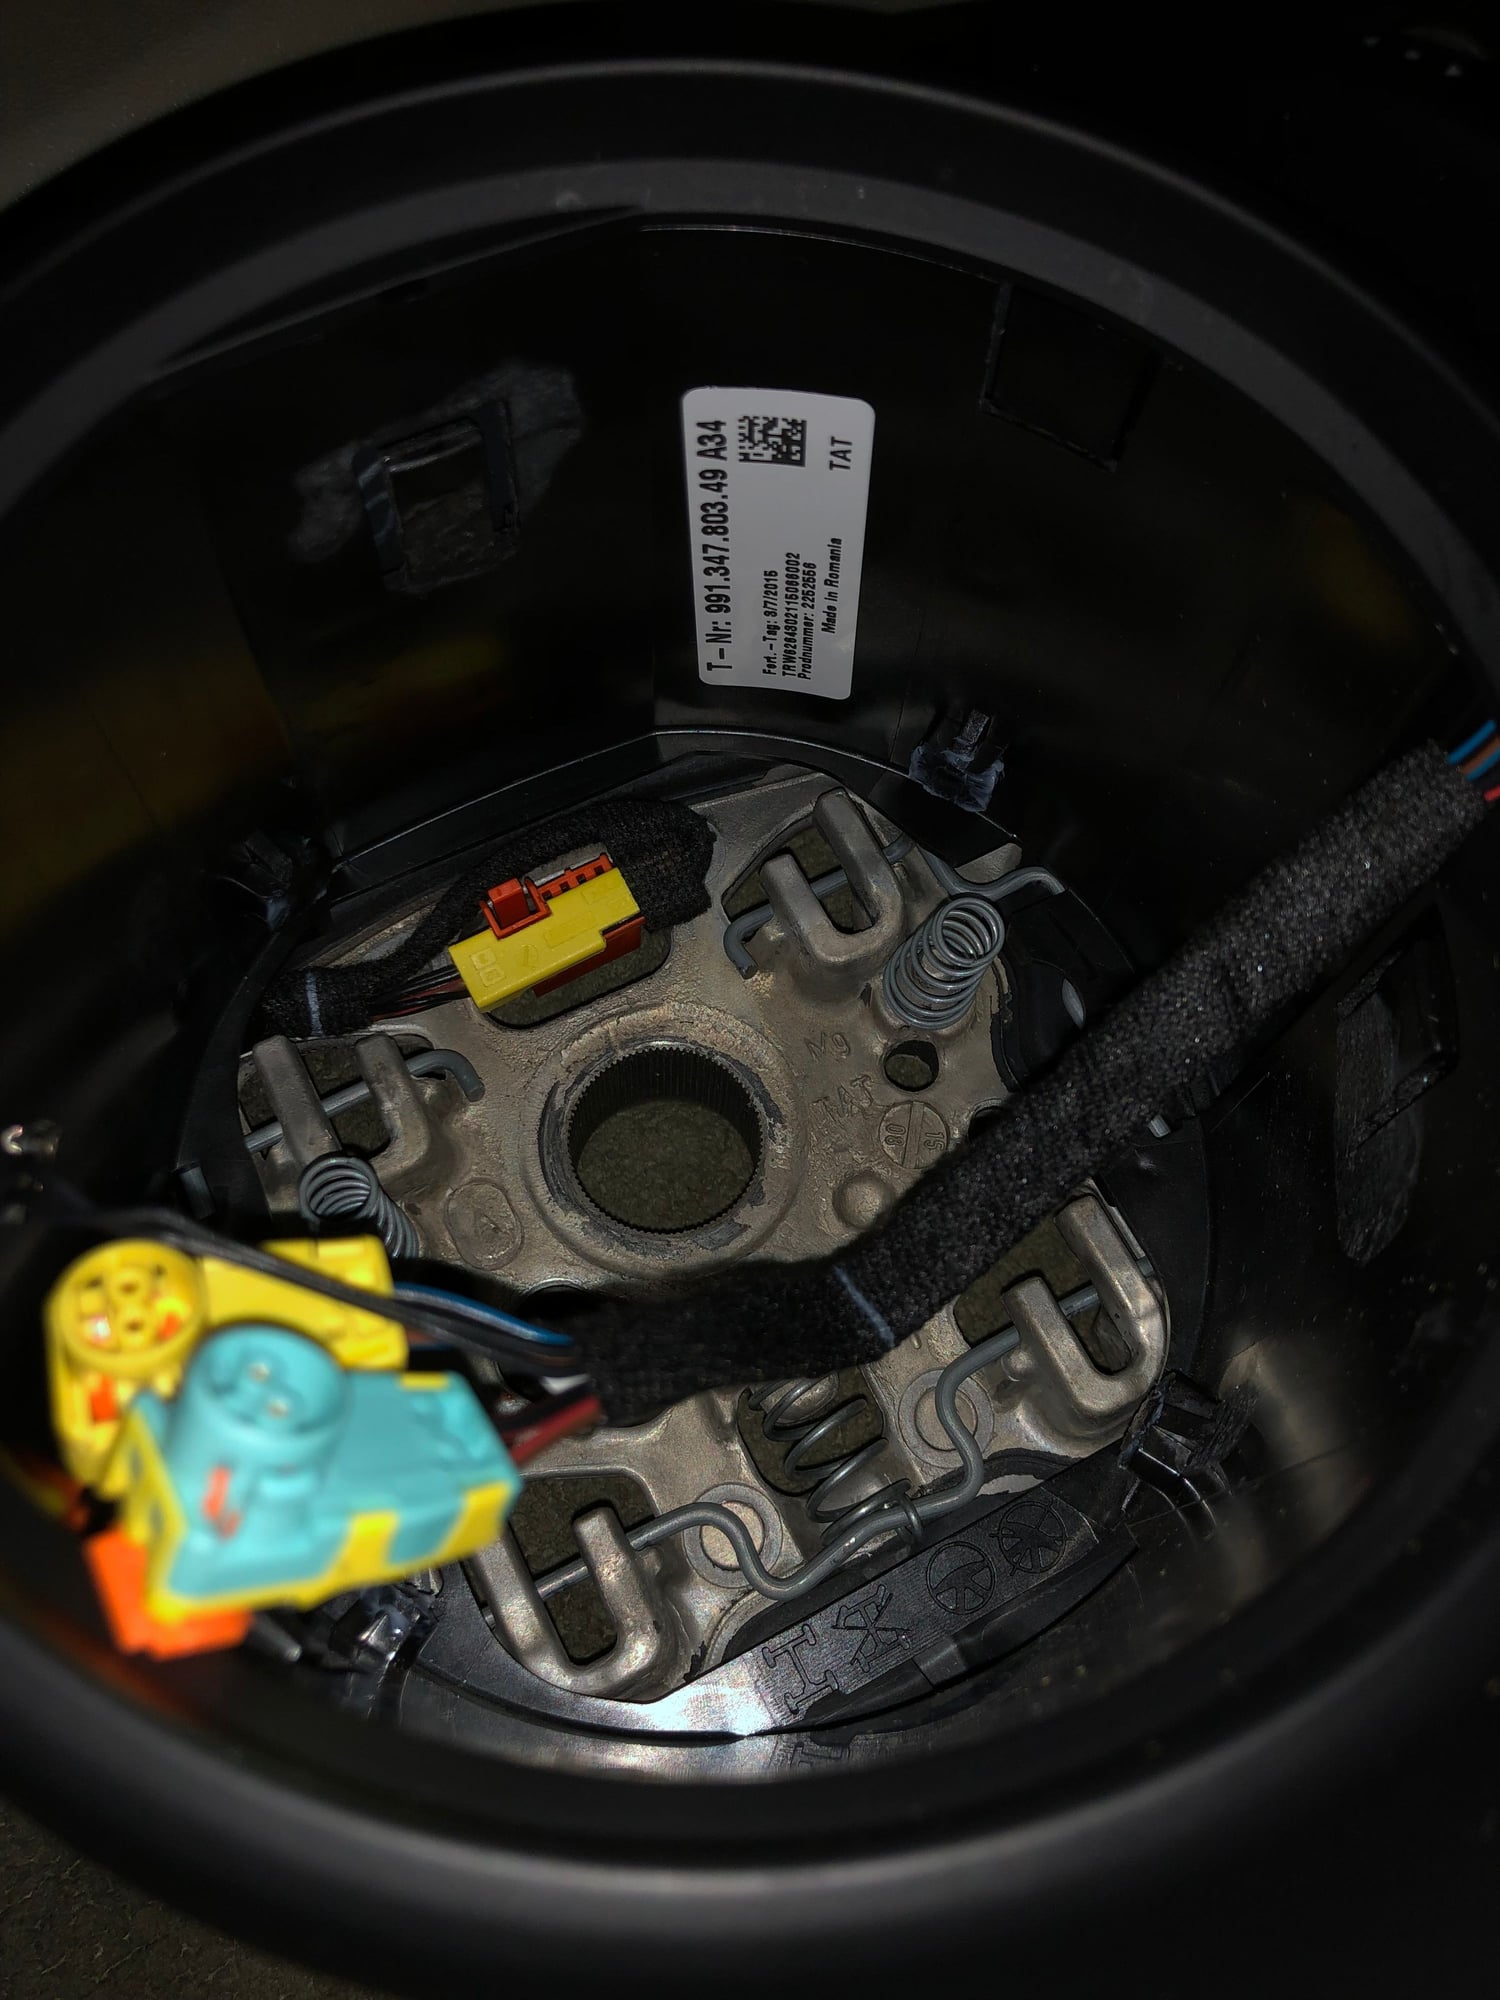 Steering/Suspension - Leather Multifunction steering wheel 9x1, ?? - Used - 2012 to 2016 Porsche 911 - Sarasota, FL 34202, United States